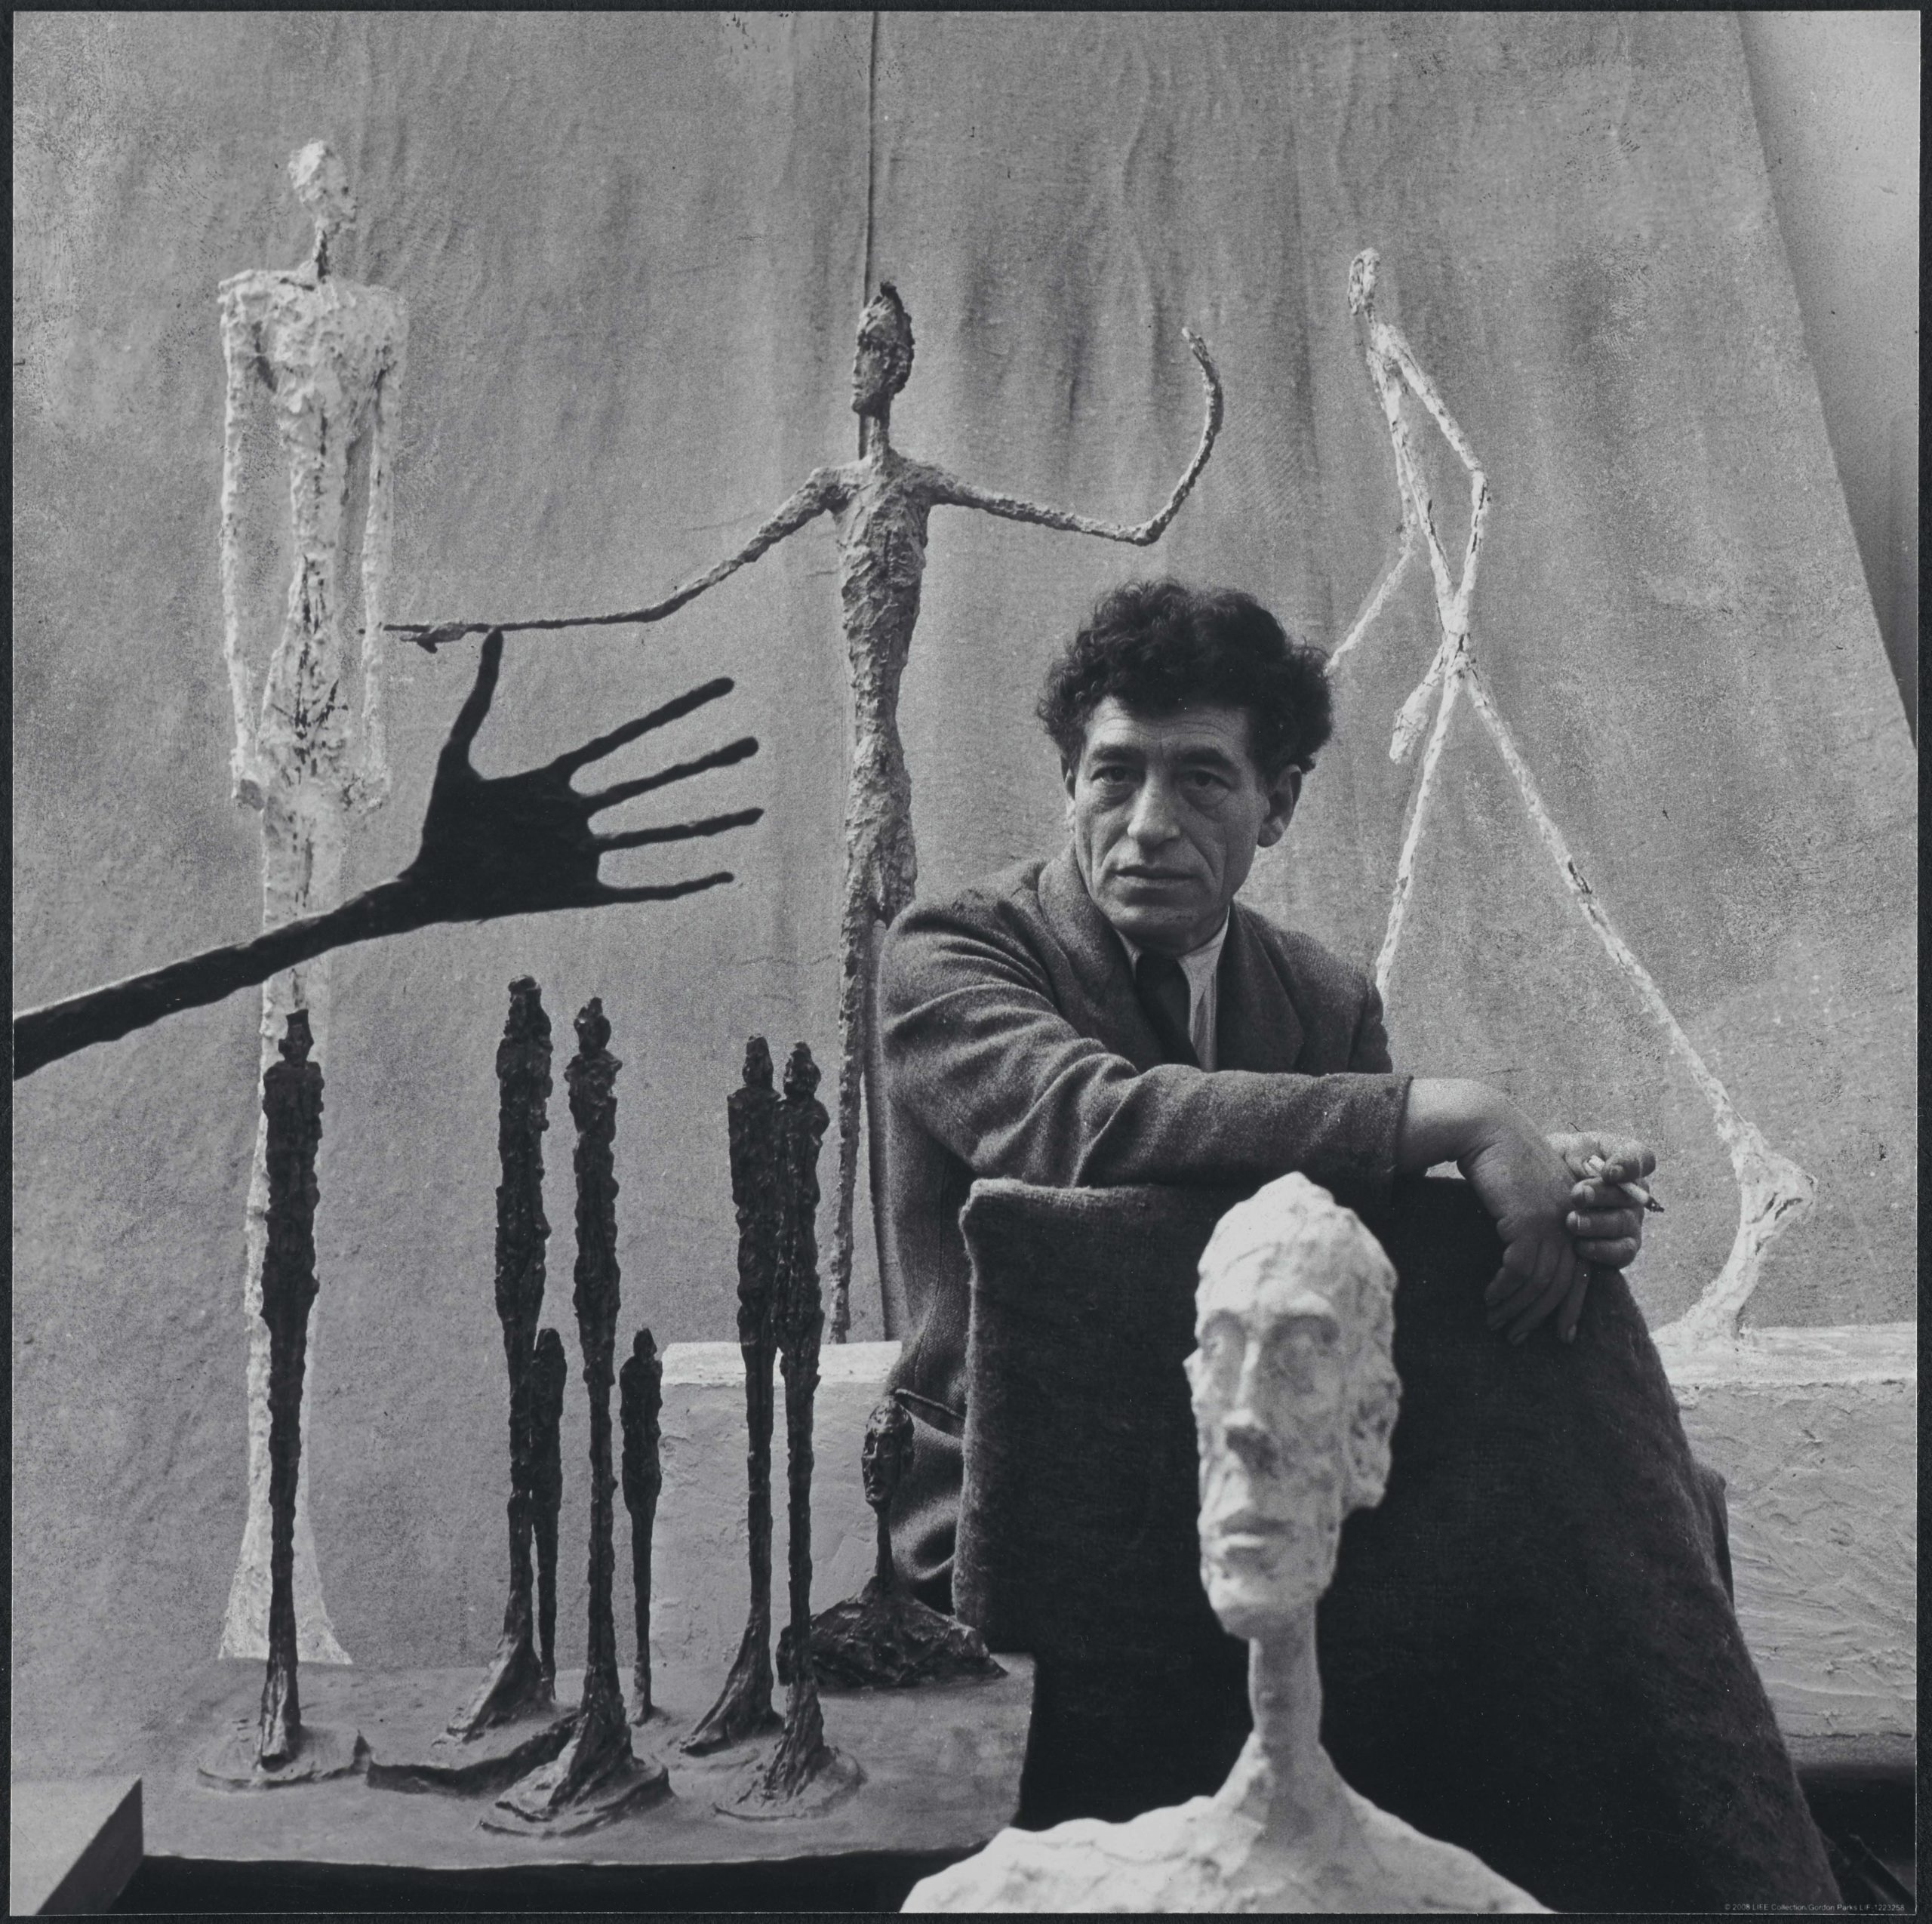 La memoria recobrada de Giacometti en el Guggenheim Bilbao